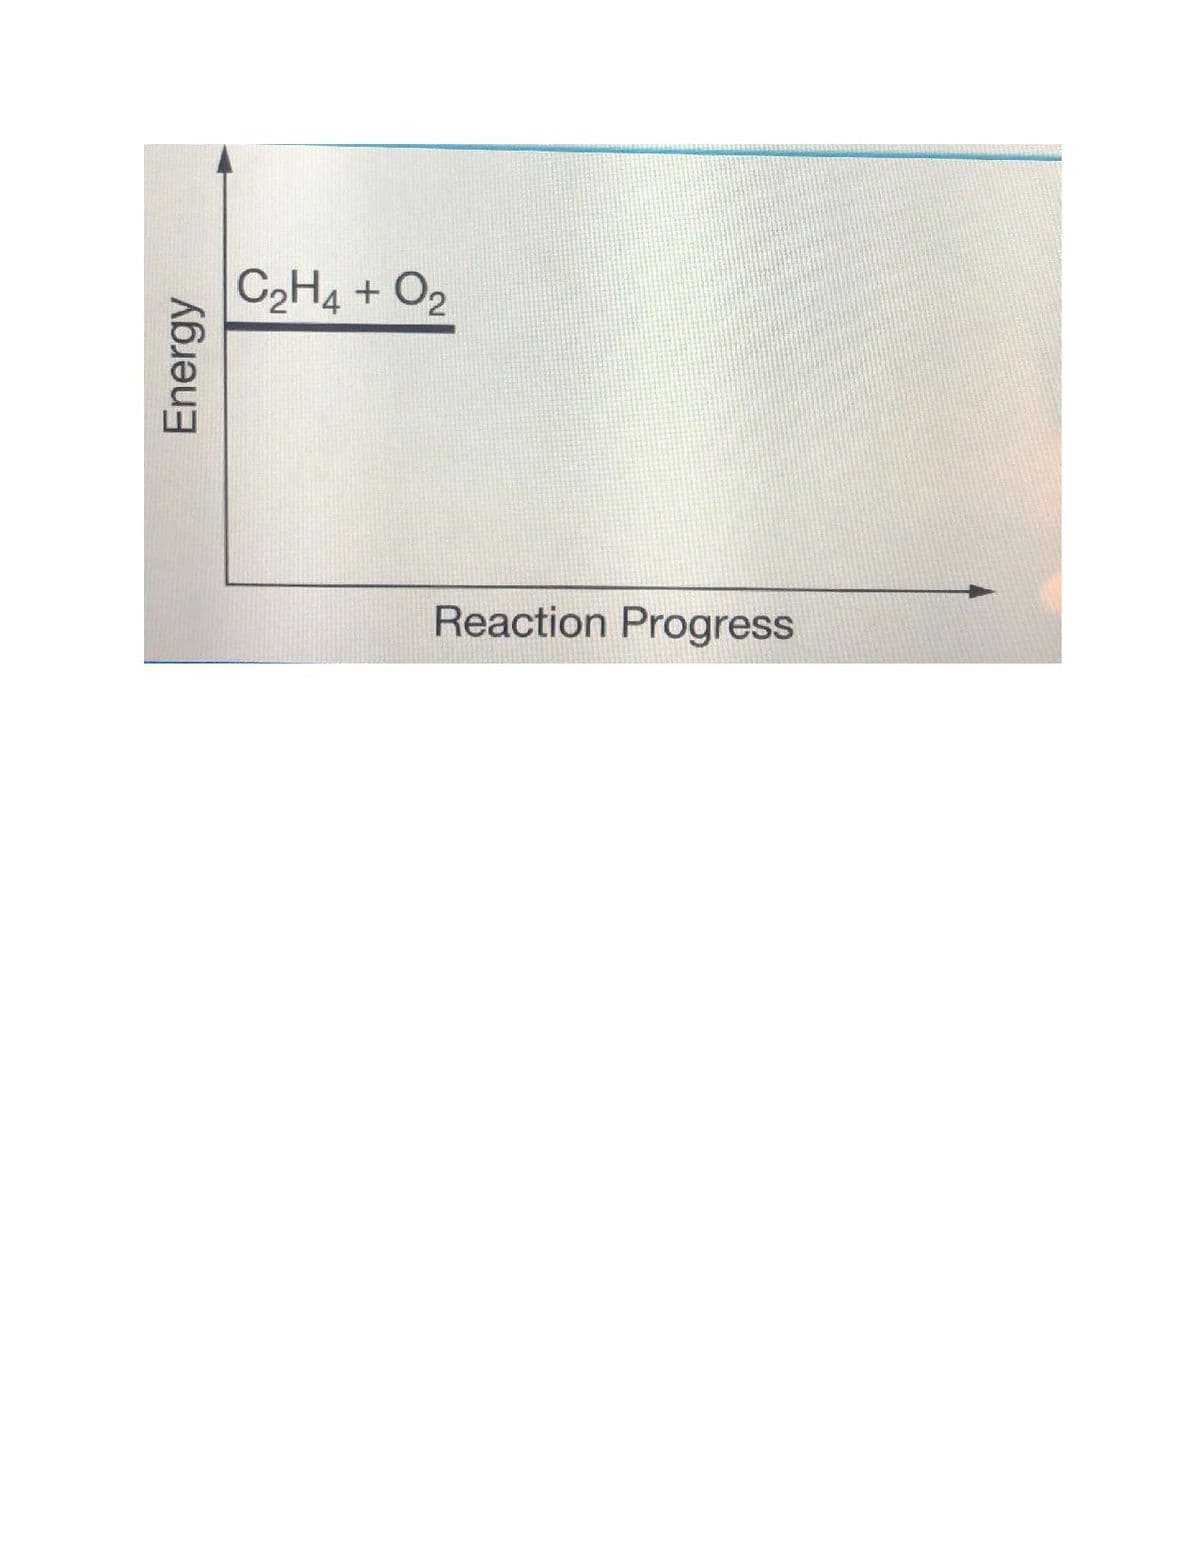 C2H4 + O2
Reaction Progress
Energy
